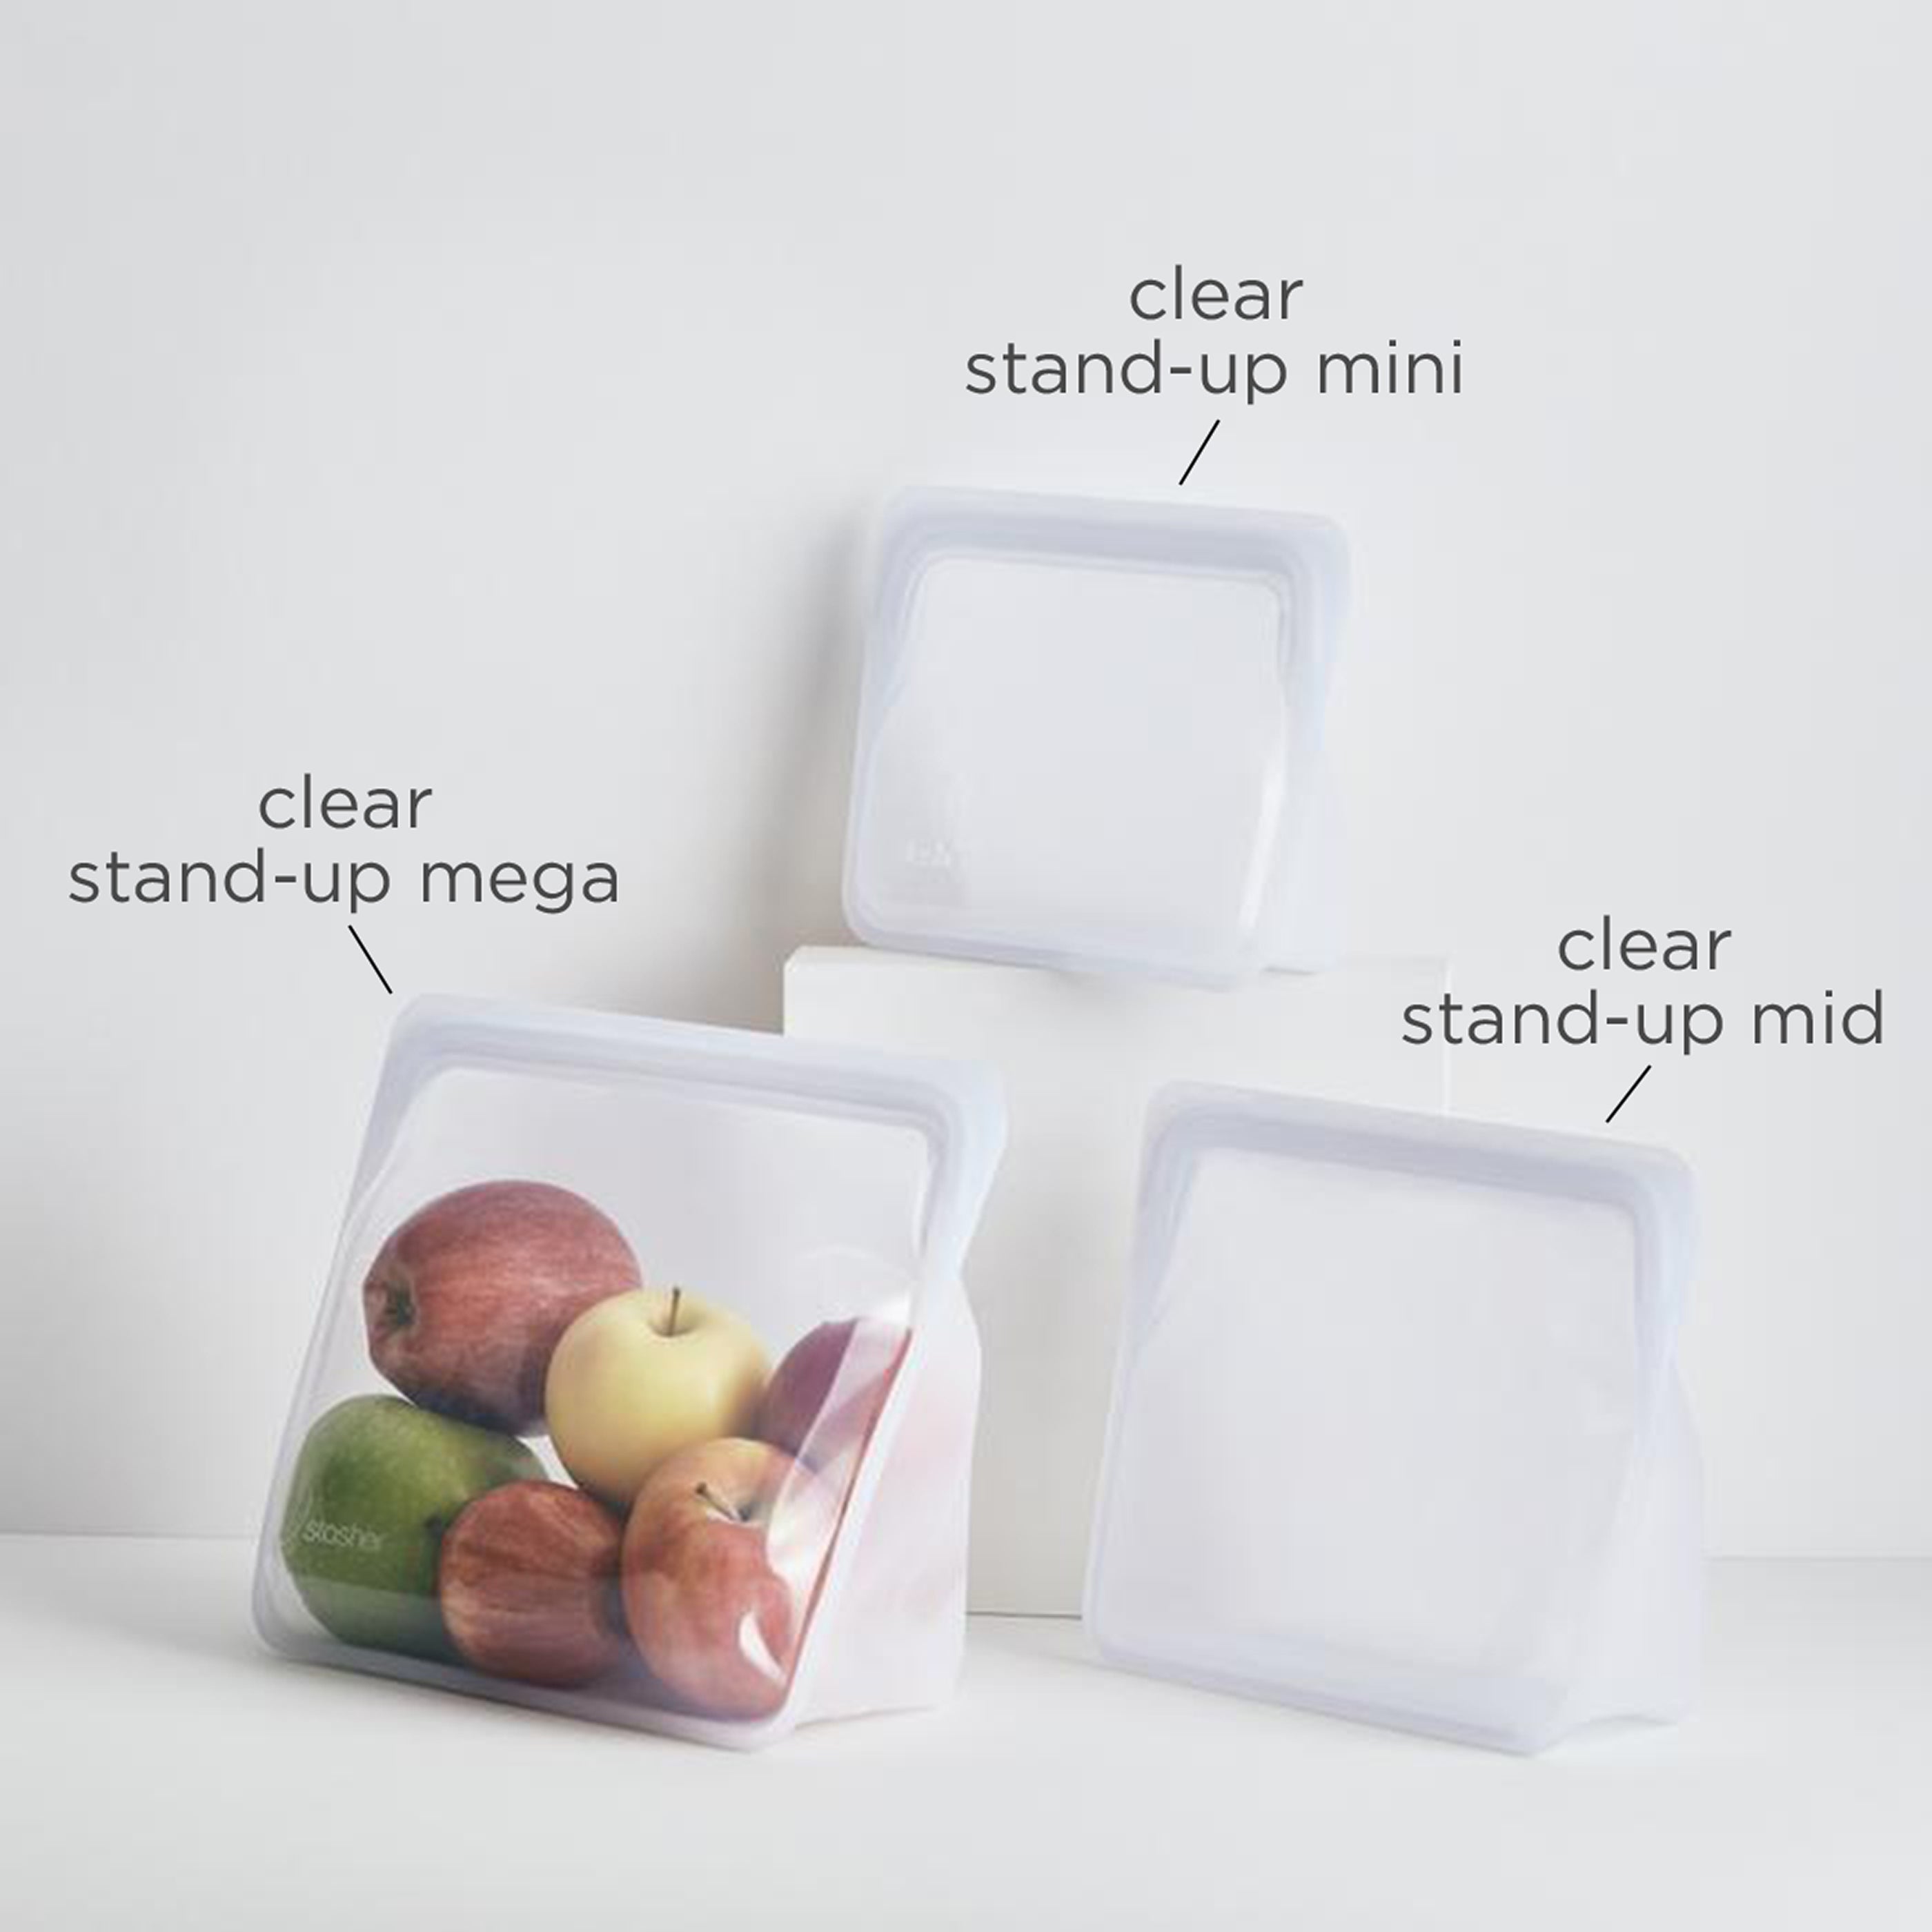 Stasher Reusable Bags Starter Set - 3pk - Clear : Target